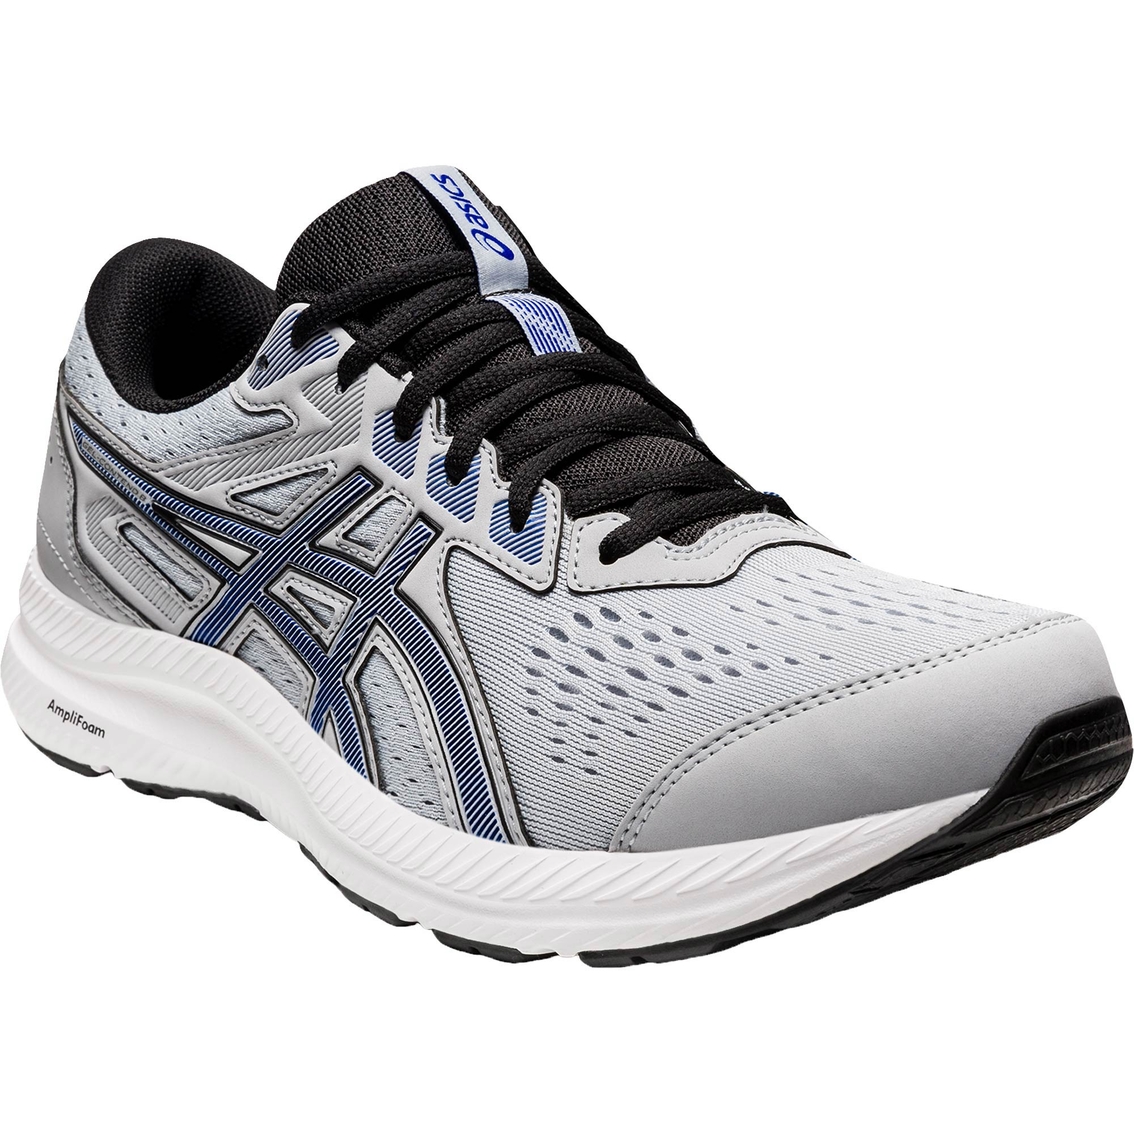 ASICS Men's Gel Contend 8 Running Shoes - Image 1 of 7